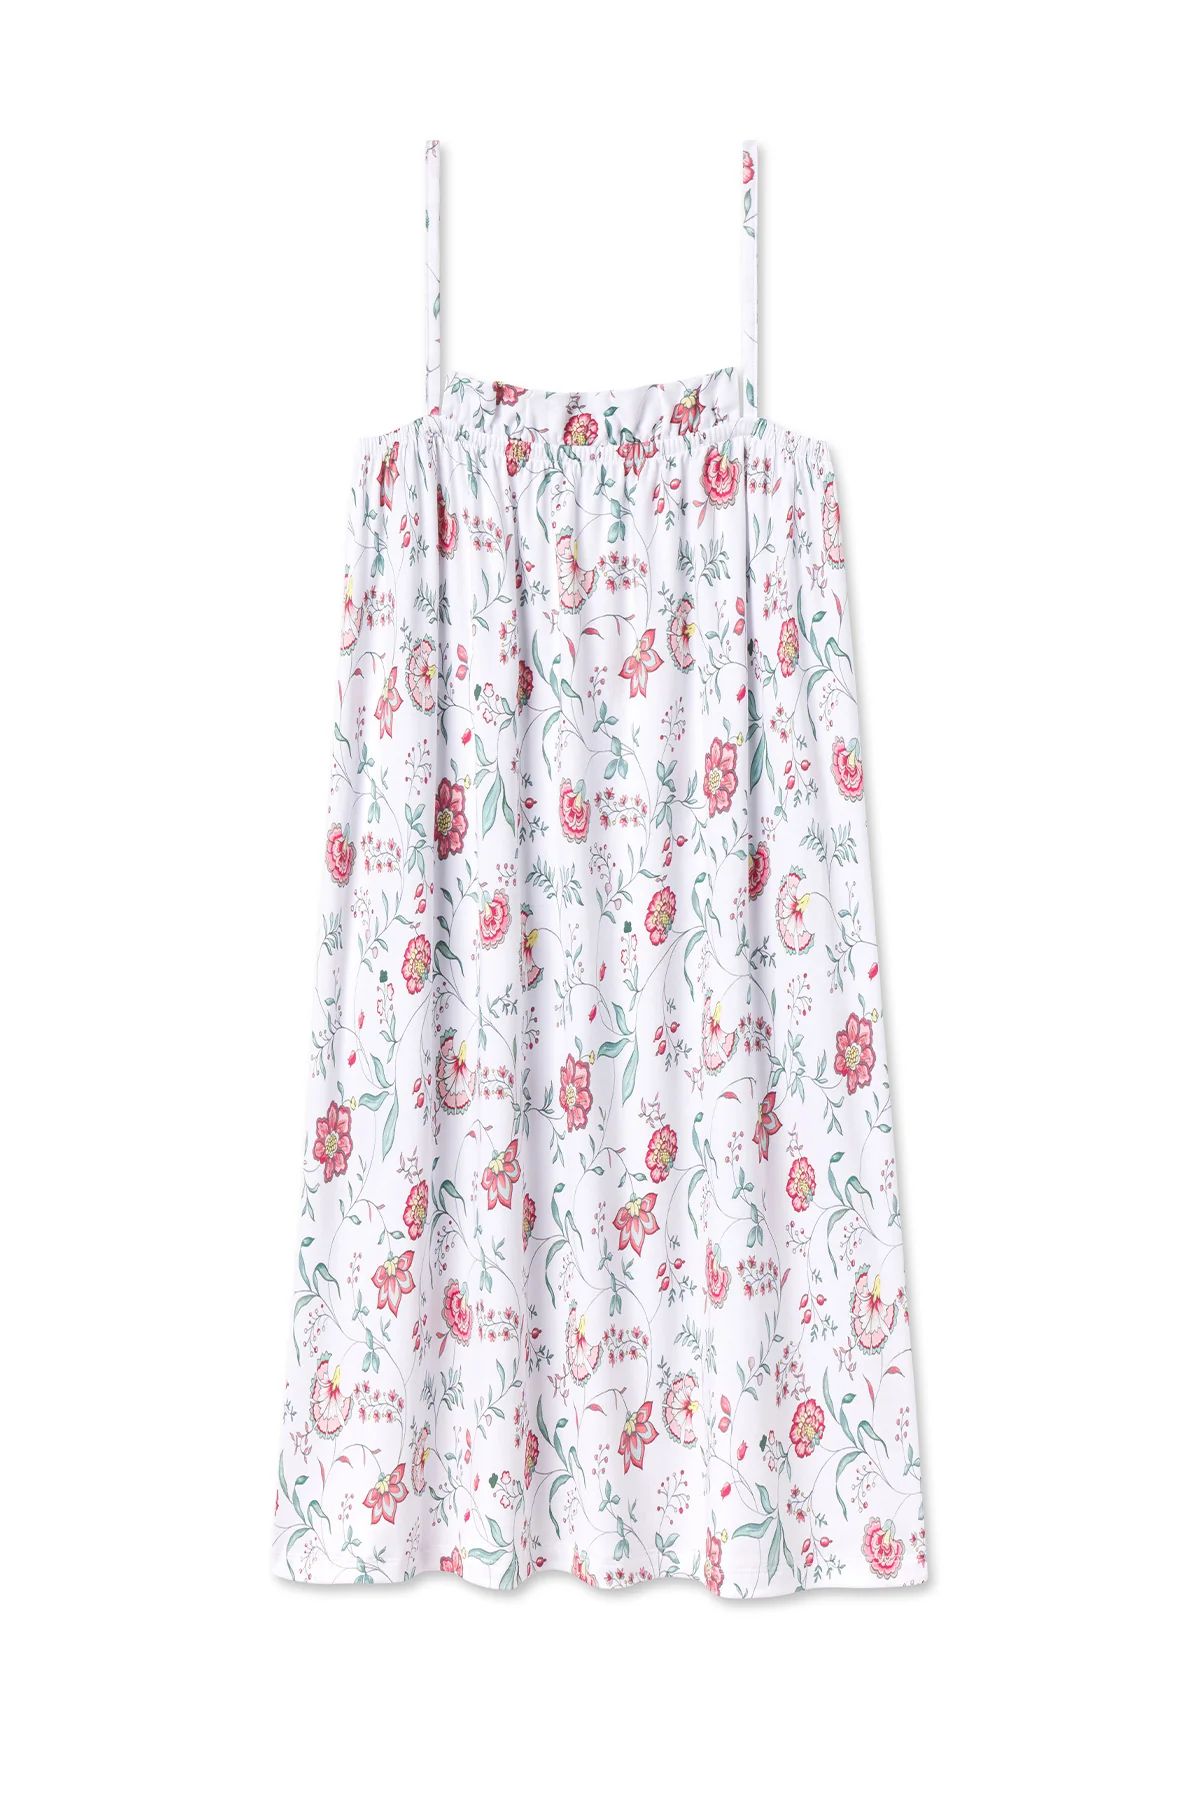 Pima Ruffle Nightgown in Garden Vines | Lake Pajamas